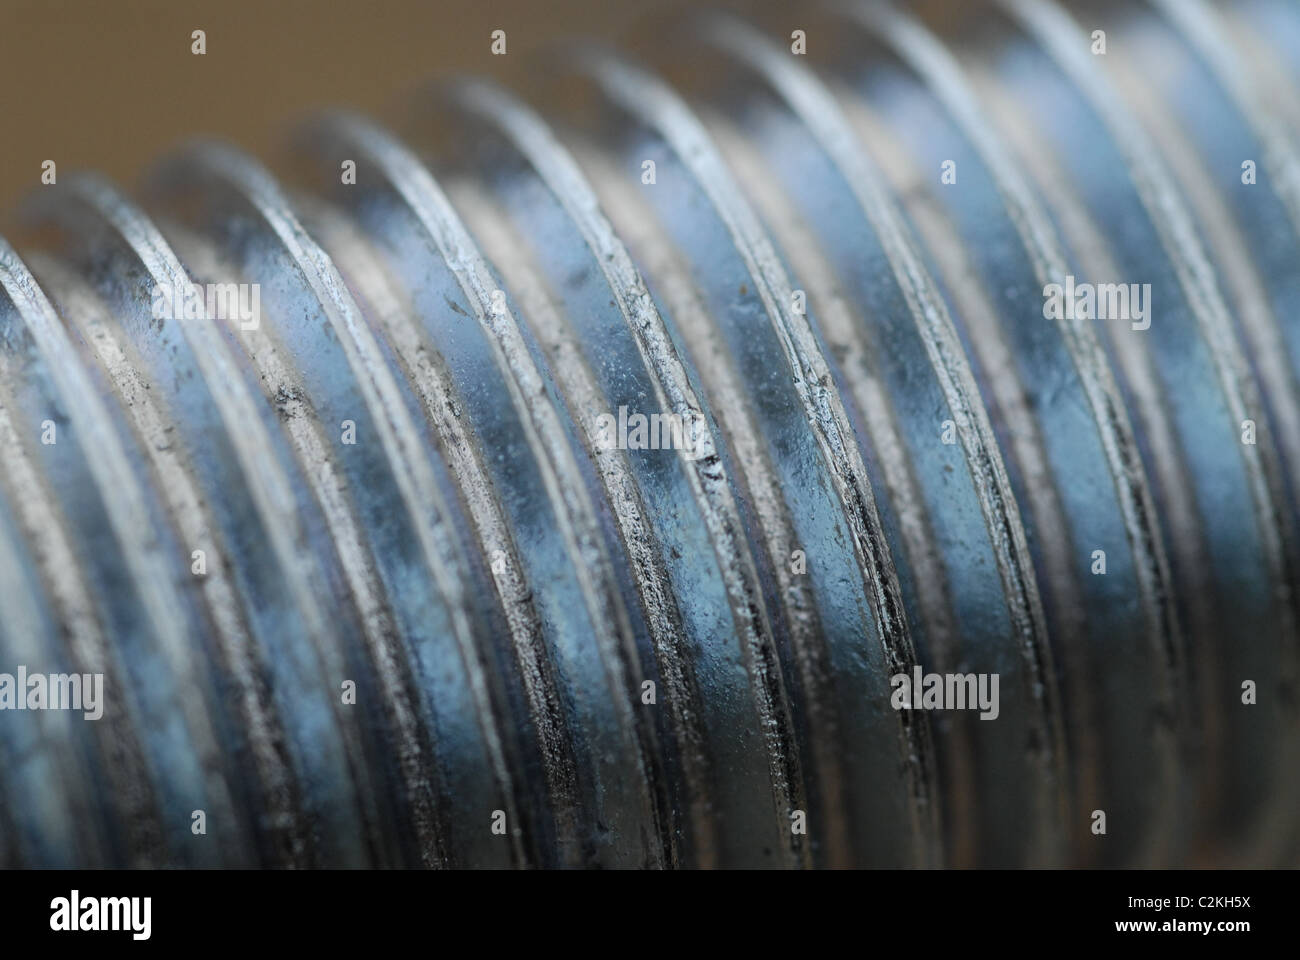 Close-up of screw thread. Stock Photo